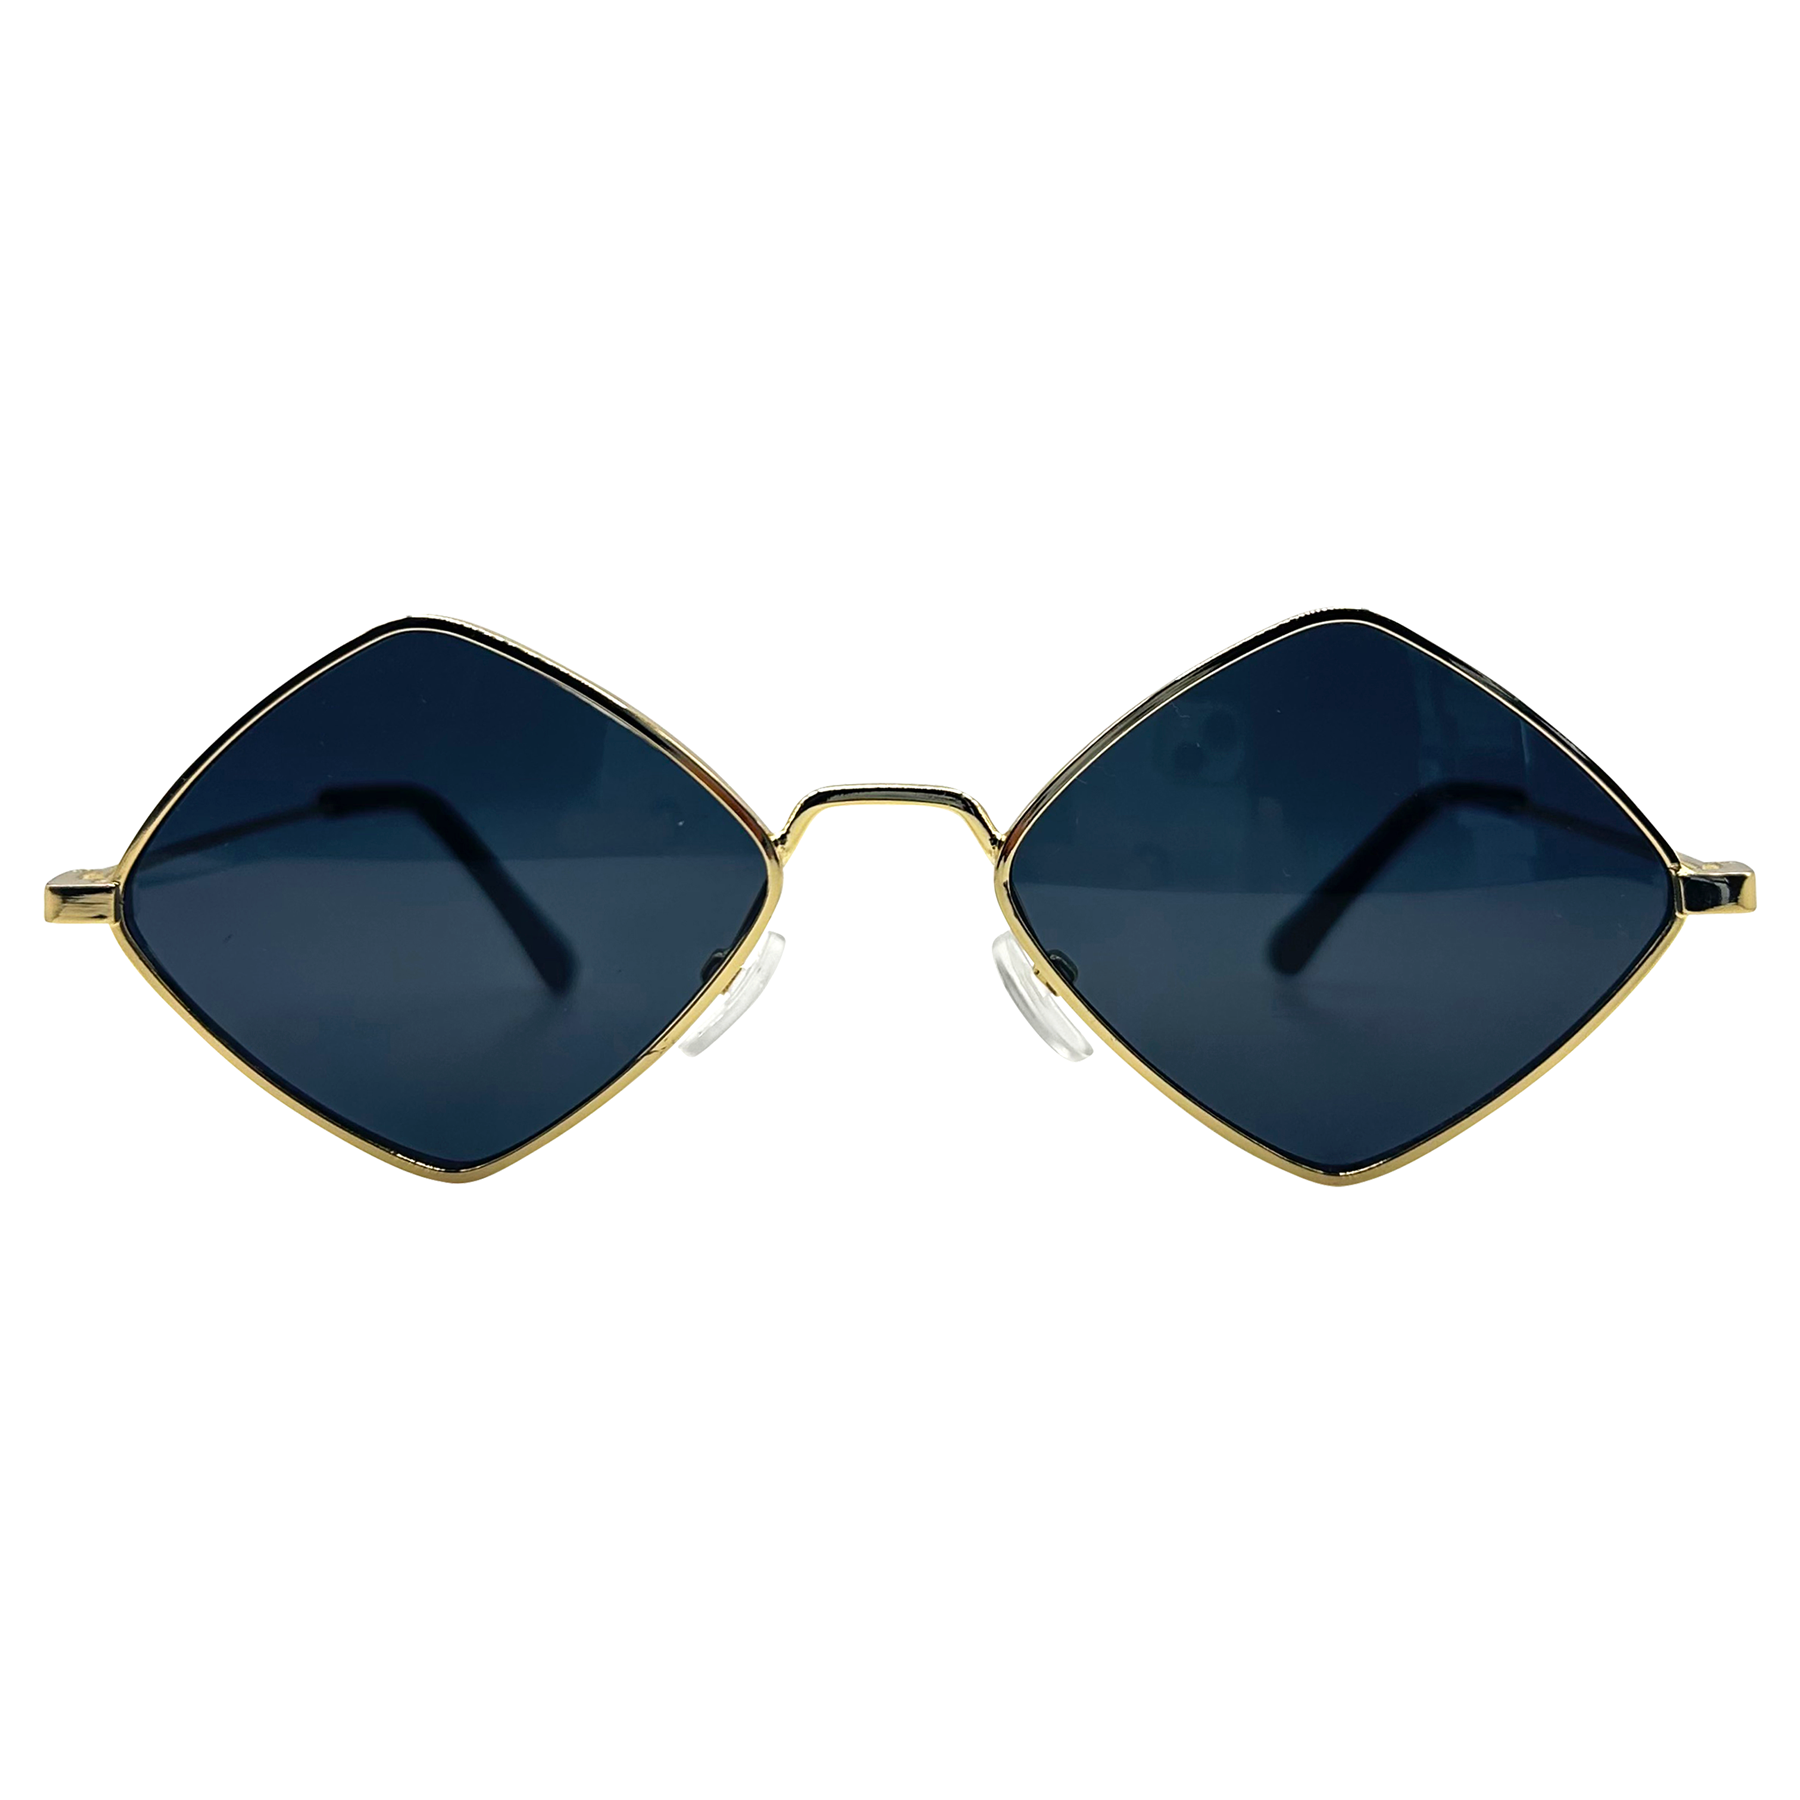 Buy Roshfort Vintage Rectangle Sunglasses for Men Women Trendy  SquareFashion Vintage Glasses with Narrow Square Frame UV400 Protection  (Black) at Amazon.in